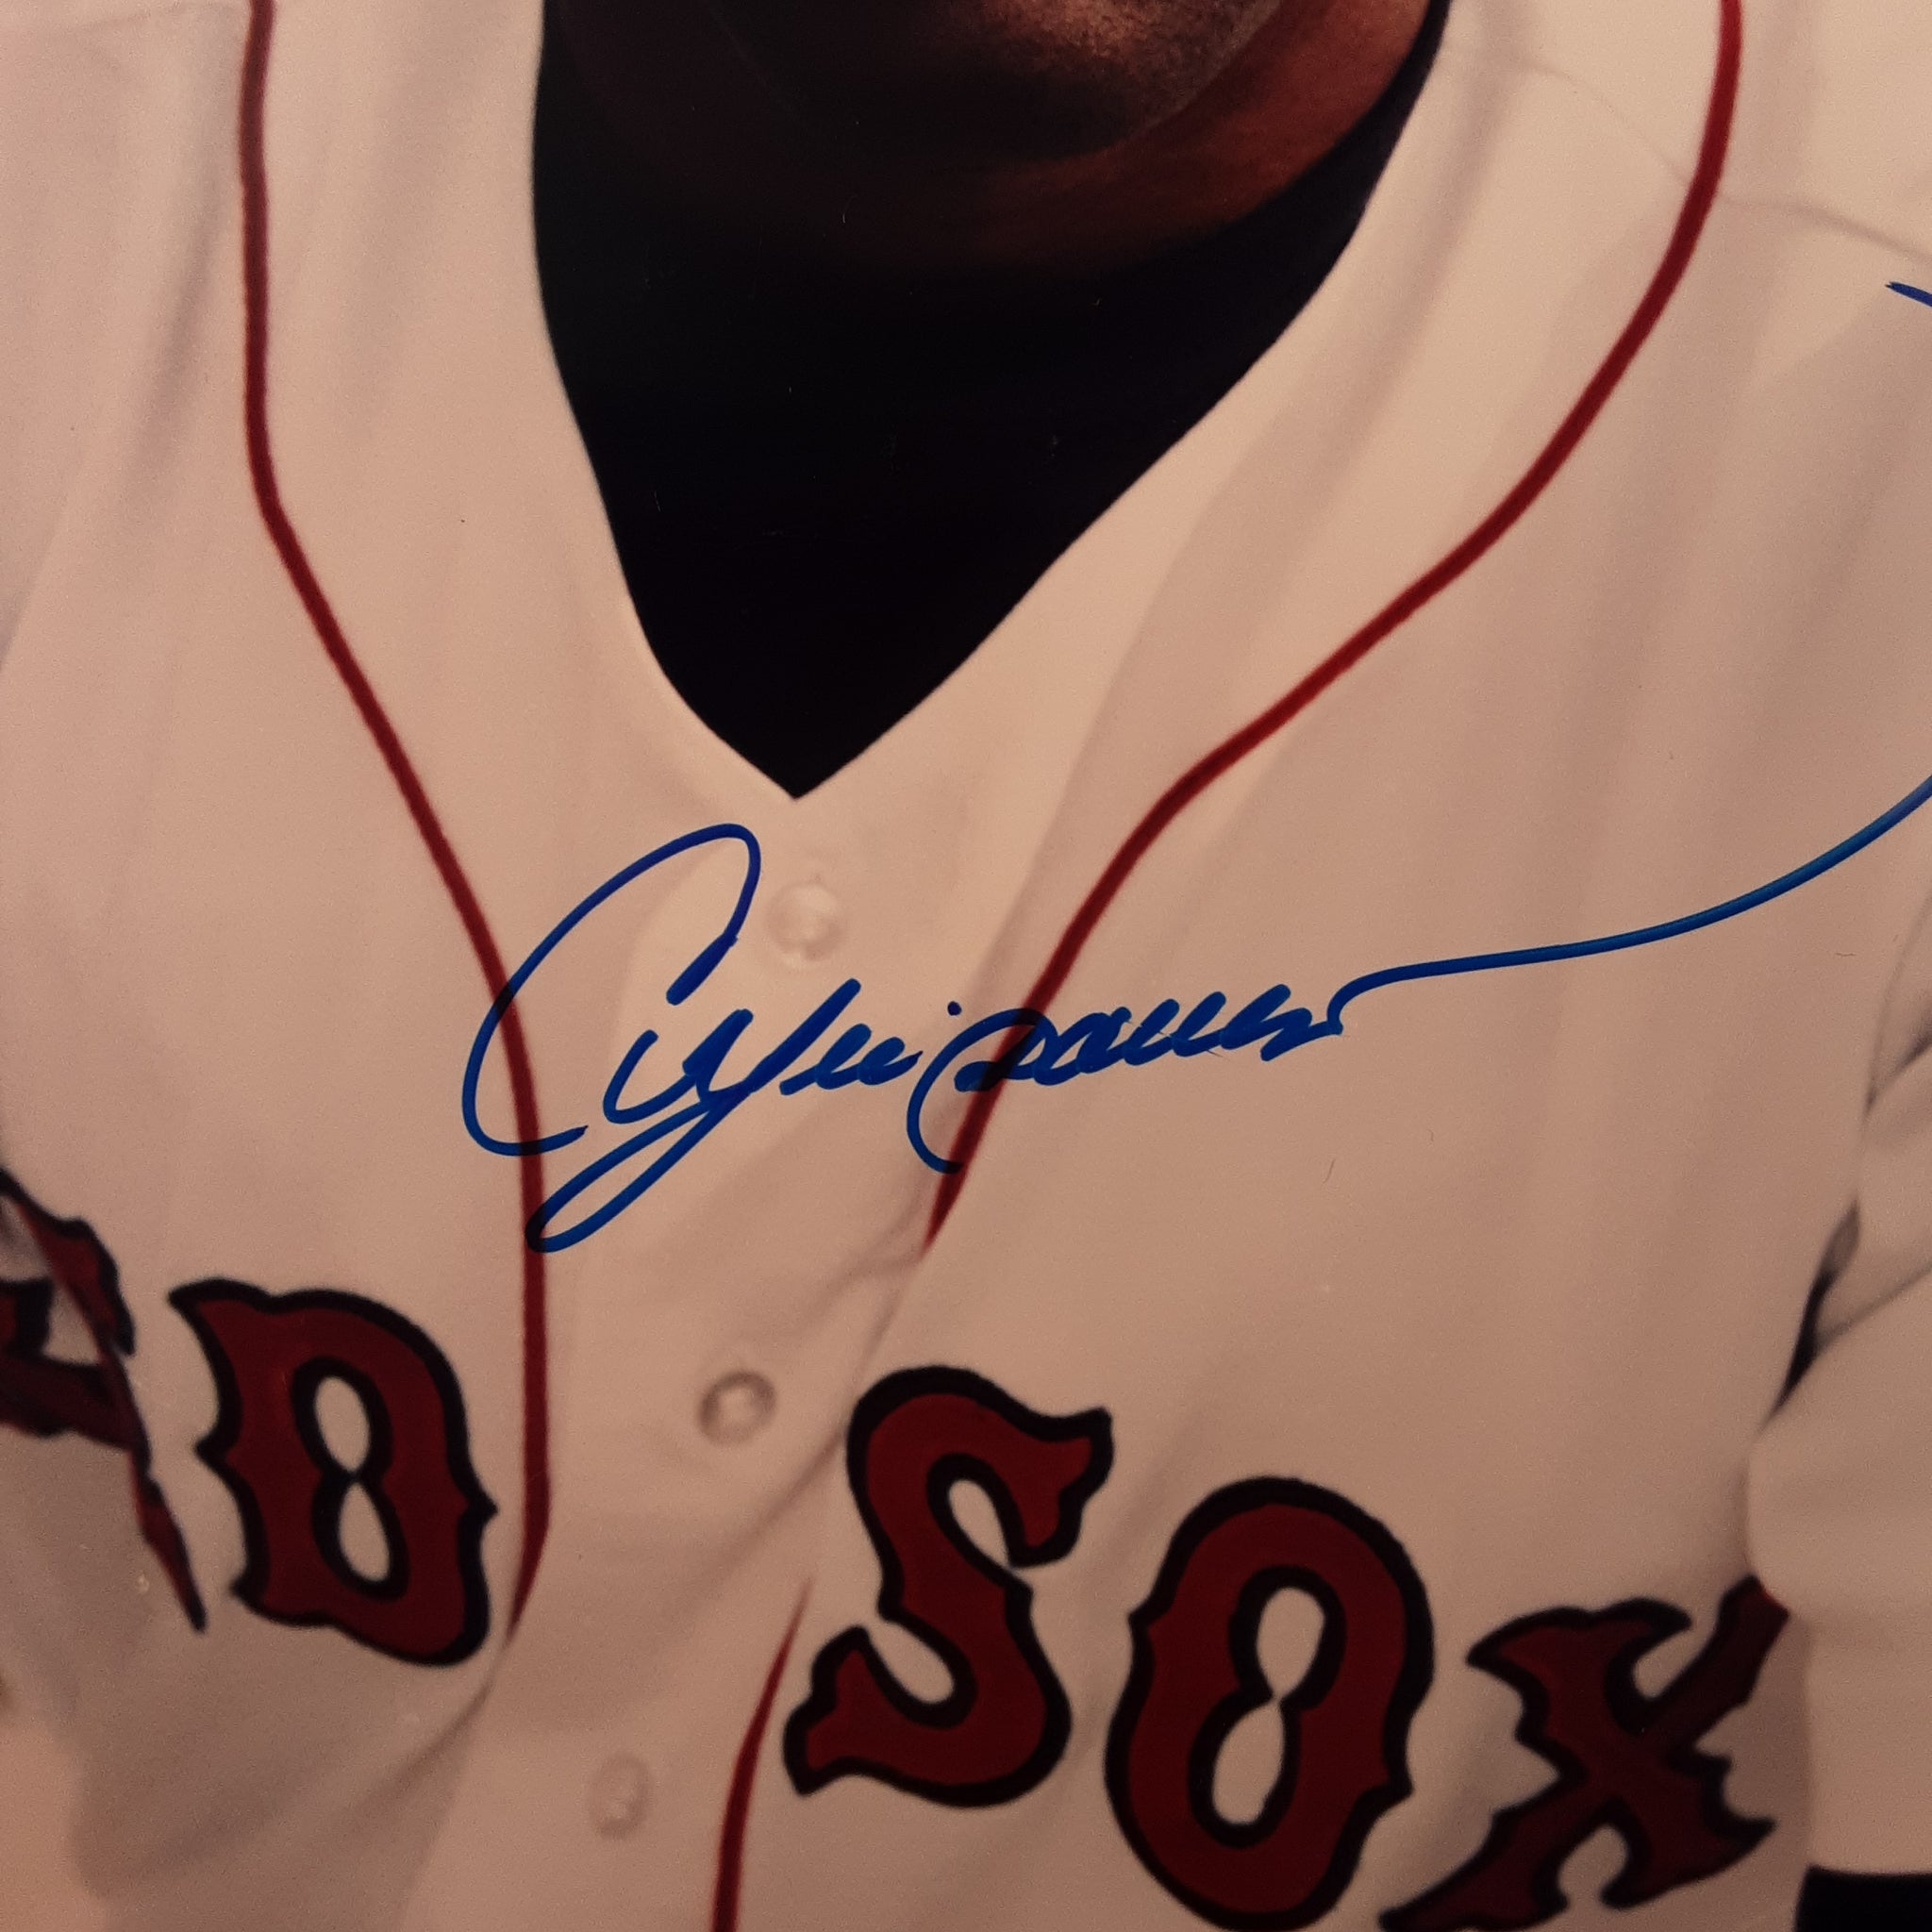 Andre Dawson Authentic Signed 8x10 Photo Autographed PSA.